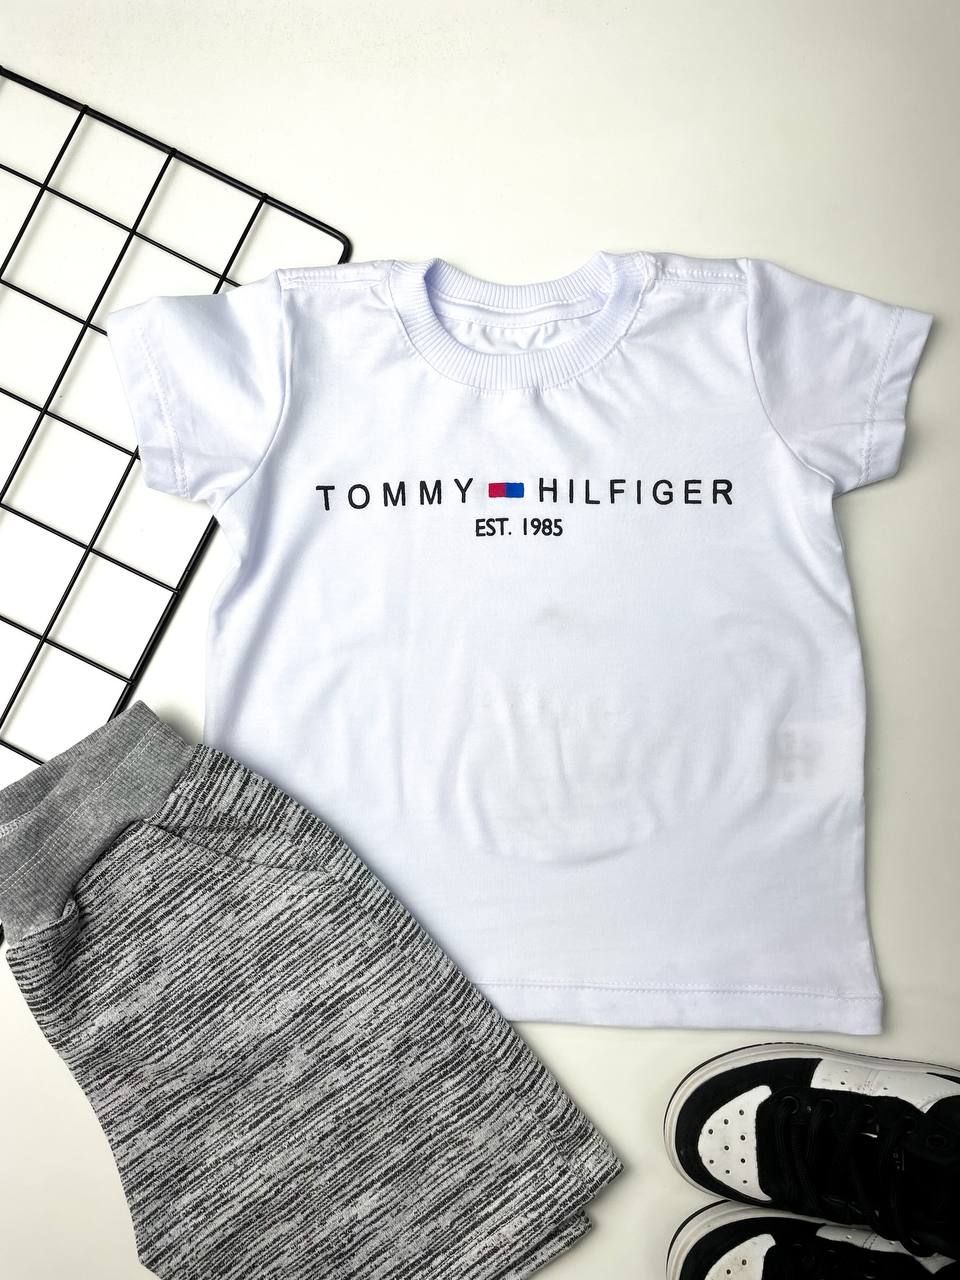 T-SHIRT INFANTIL TOMMY HILFIGER Alcateia Tshirts - As melhores